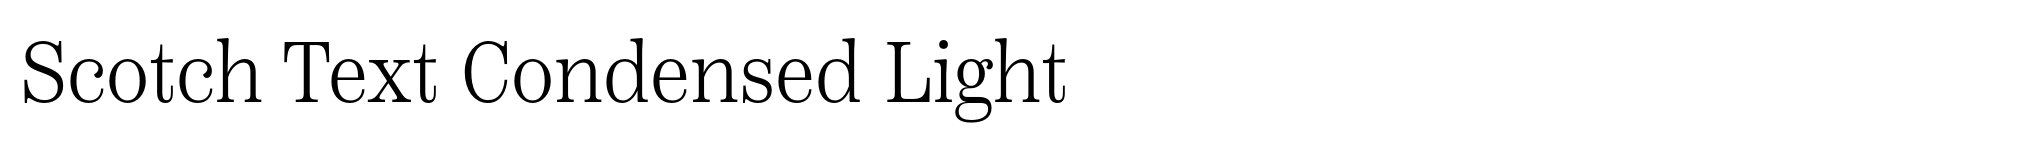 Scotch Text Condensed Light image